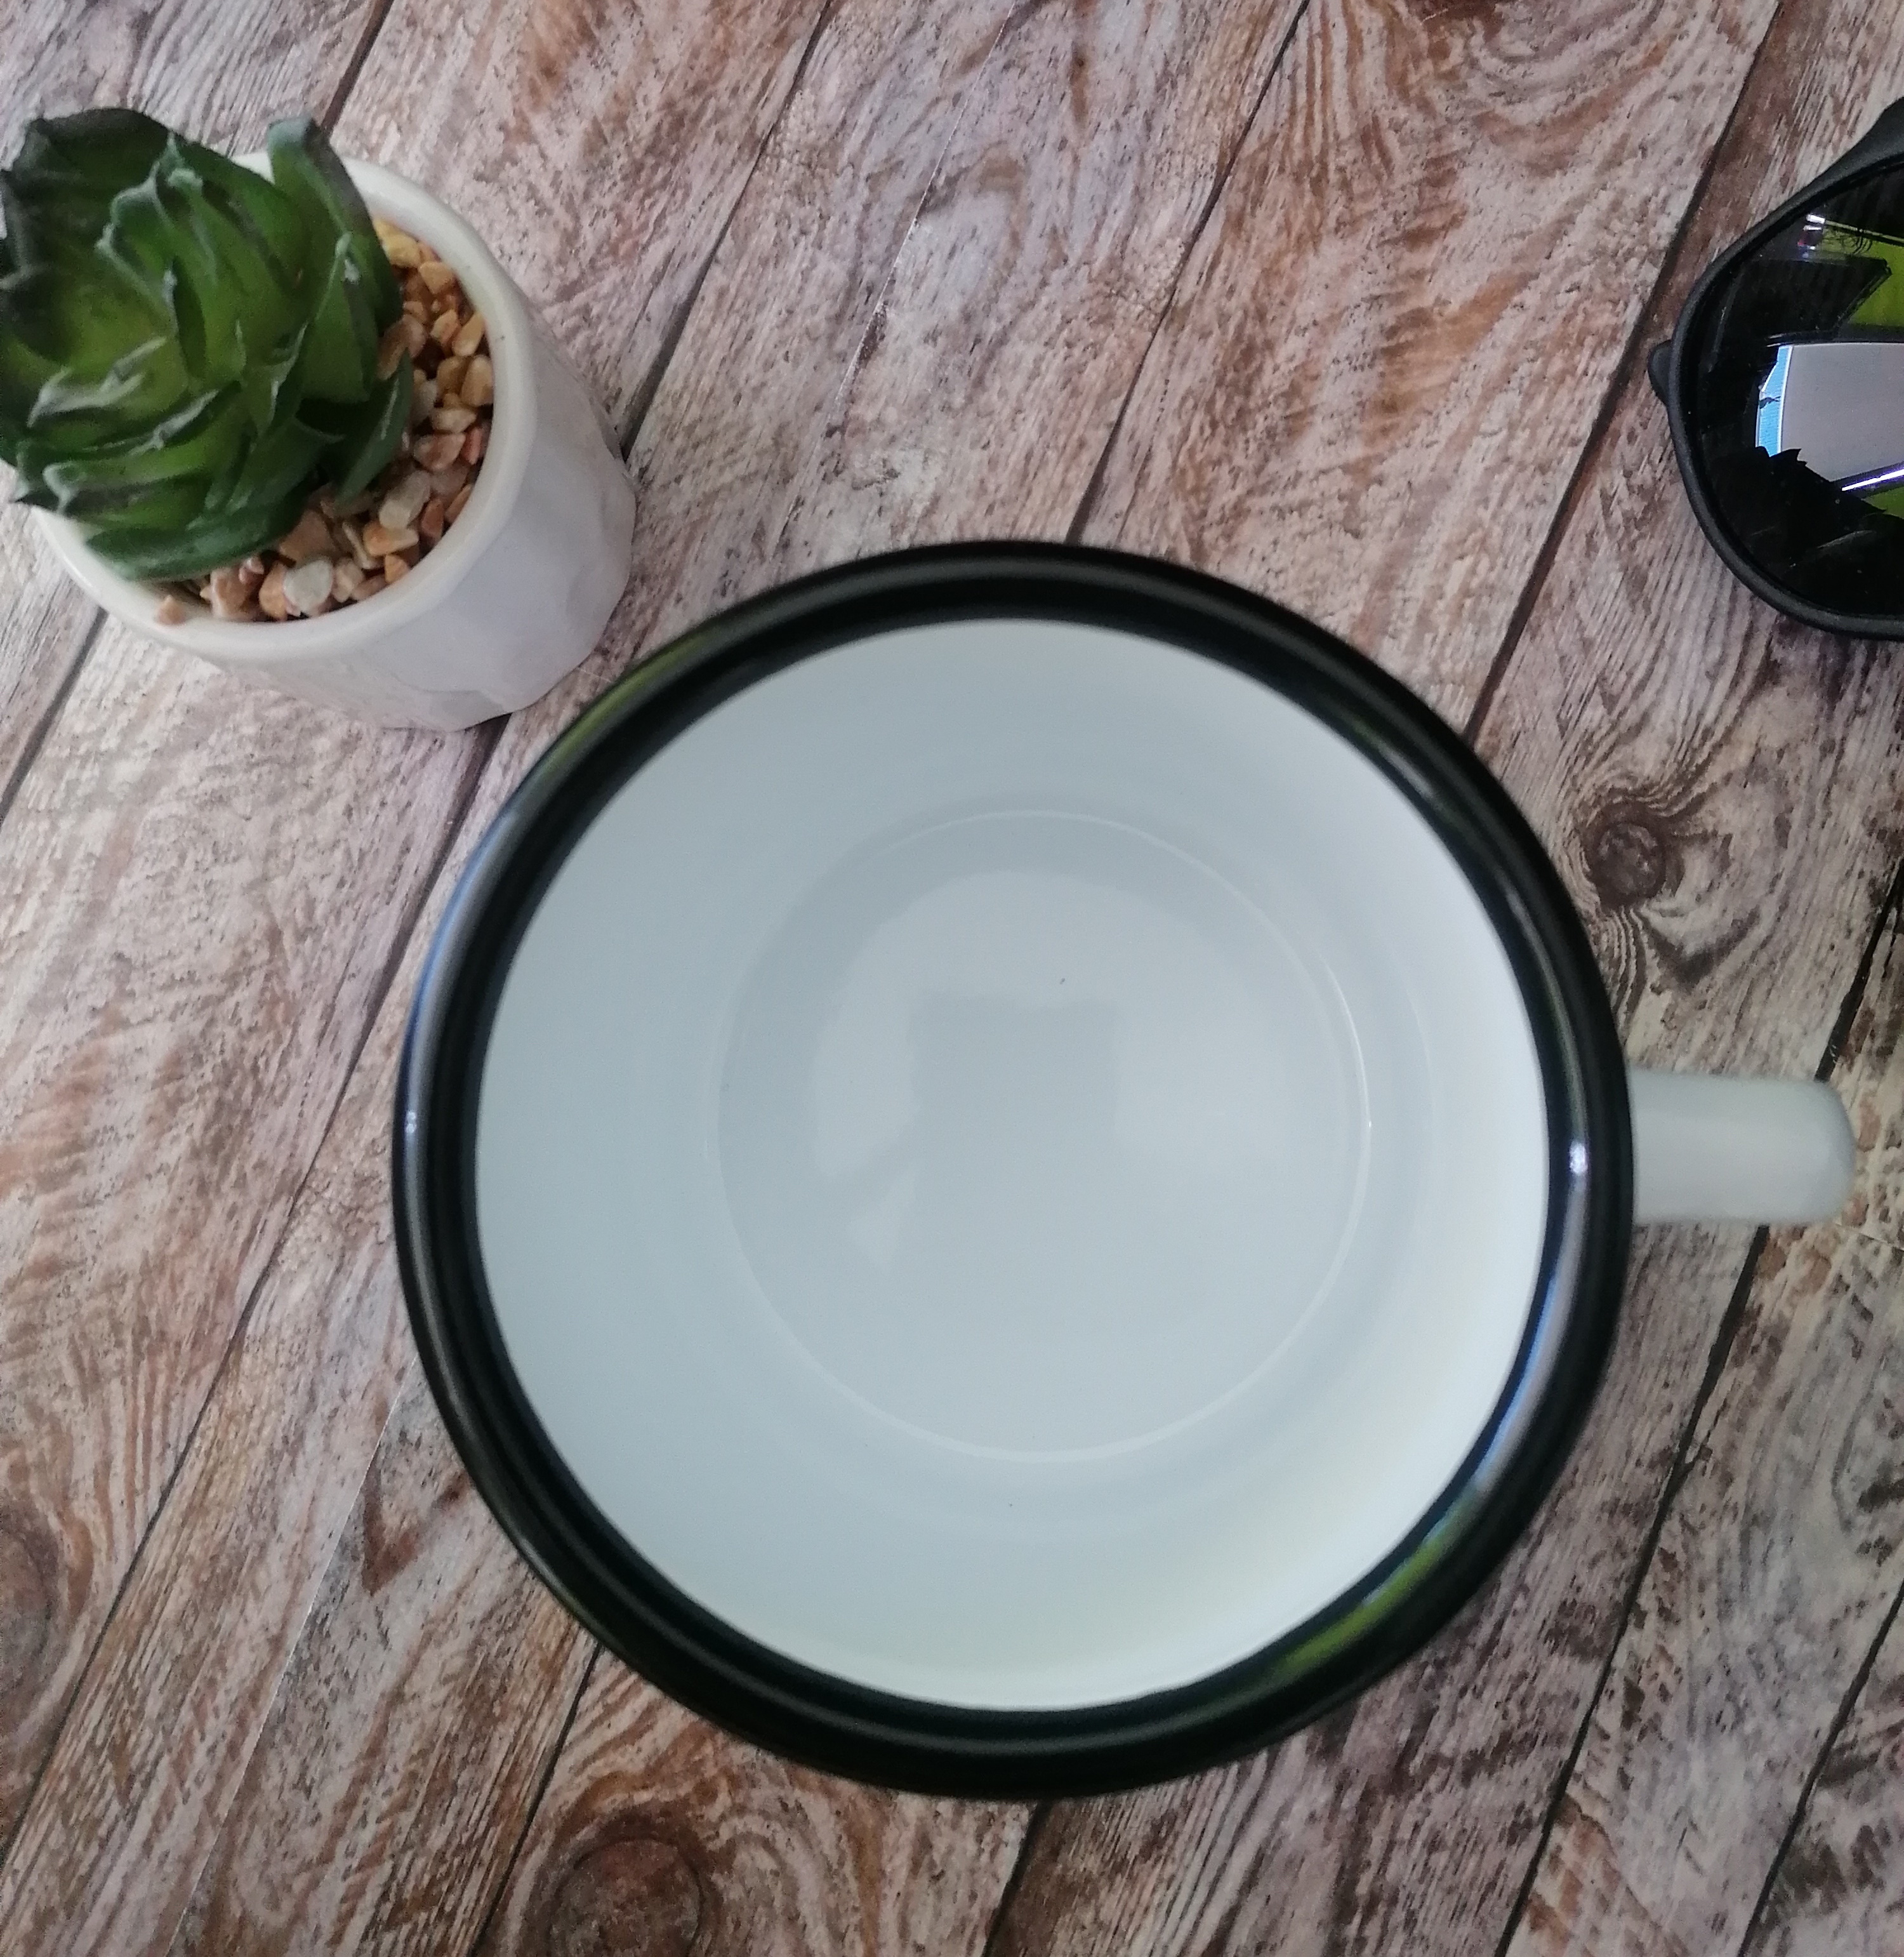 Enamel steel mug for sublimation - white with a black rim